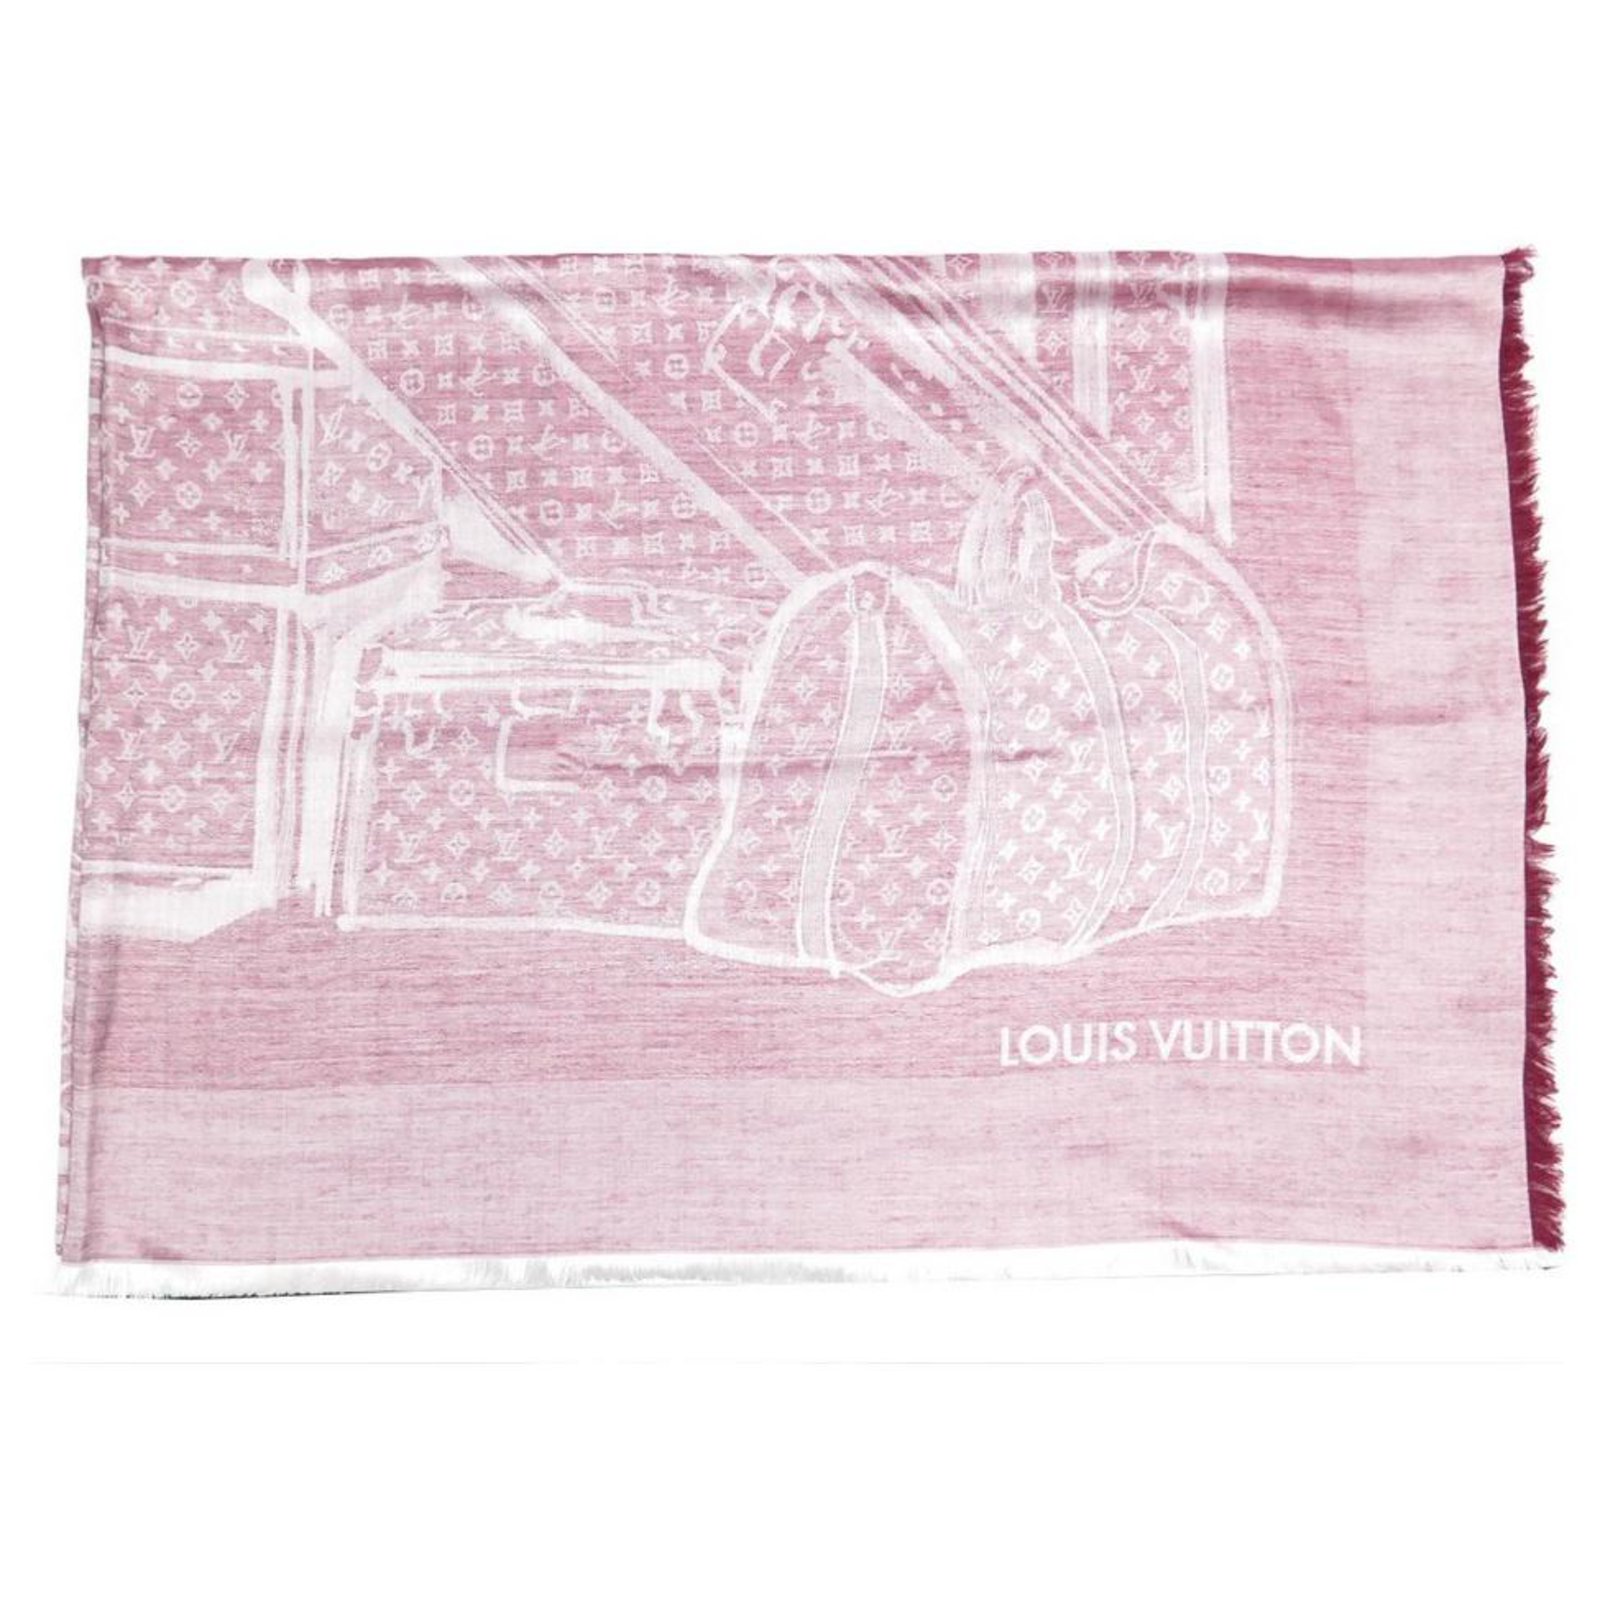 Louis Vuitton, Accessories, Louis Vuitton Bag And Scarf